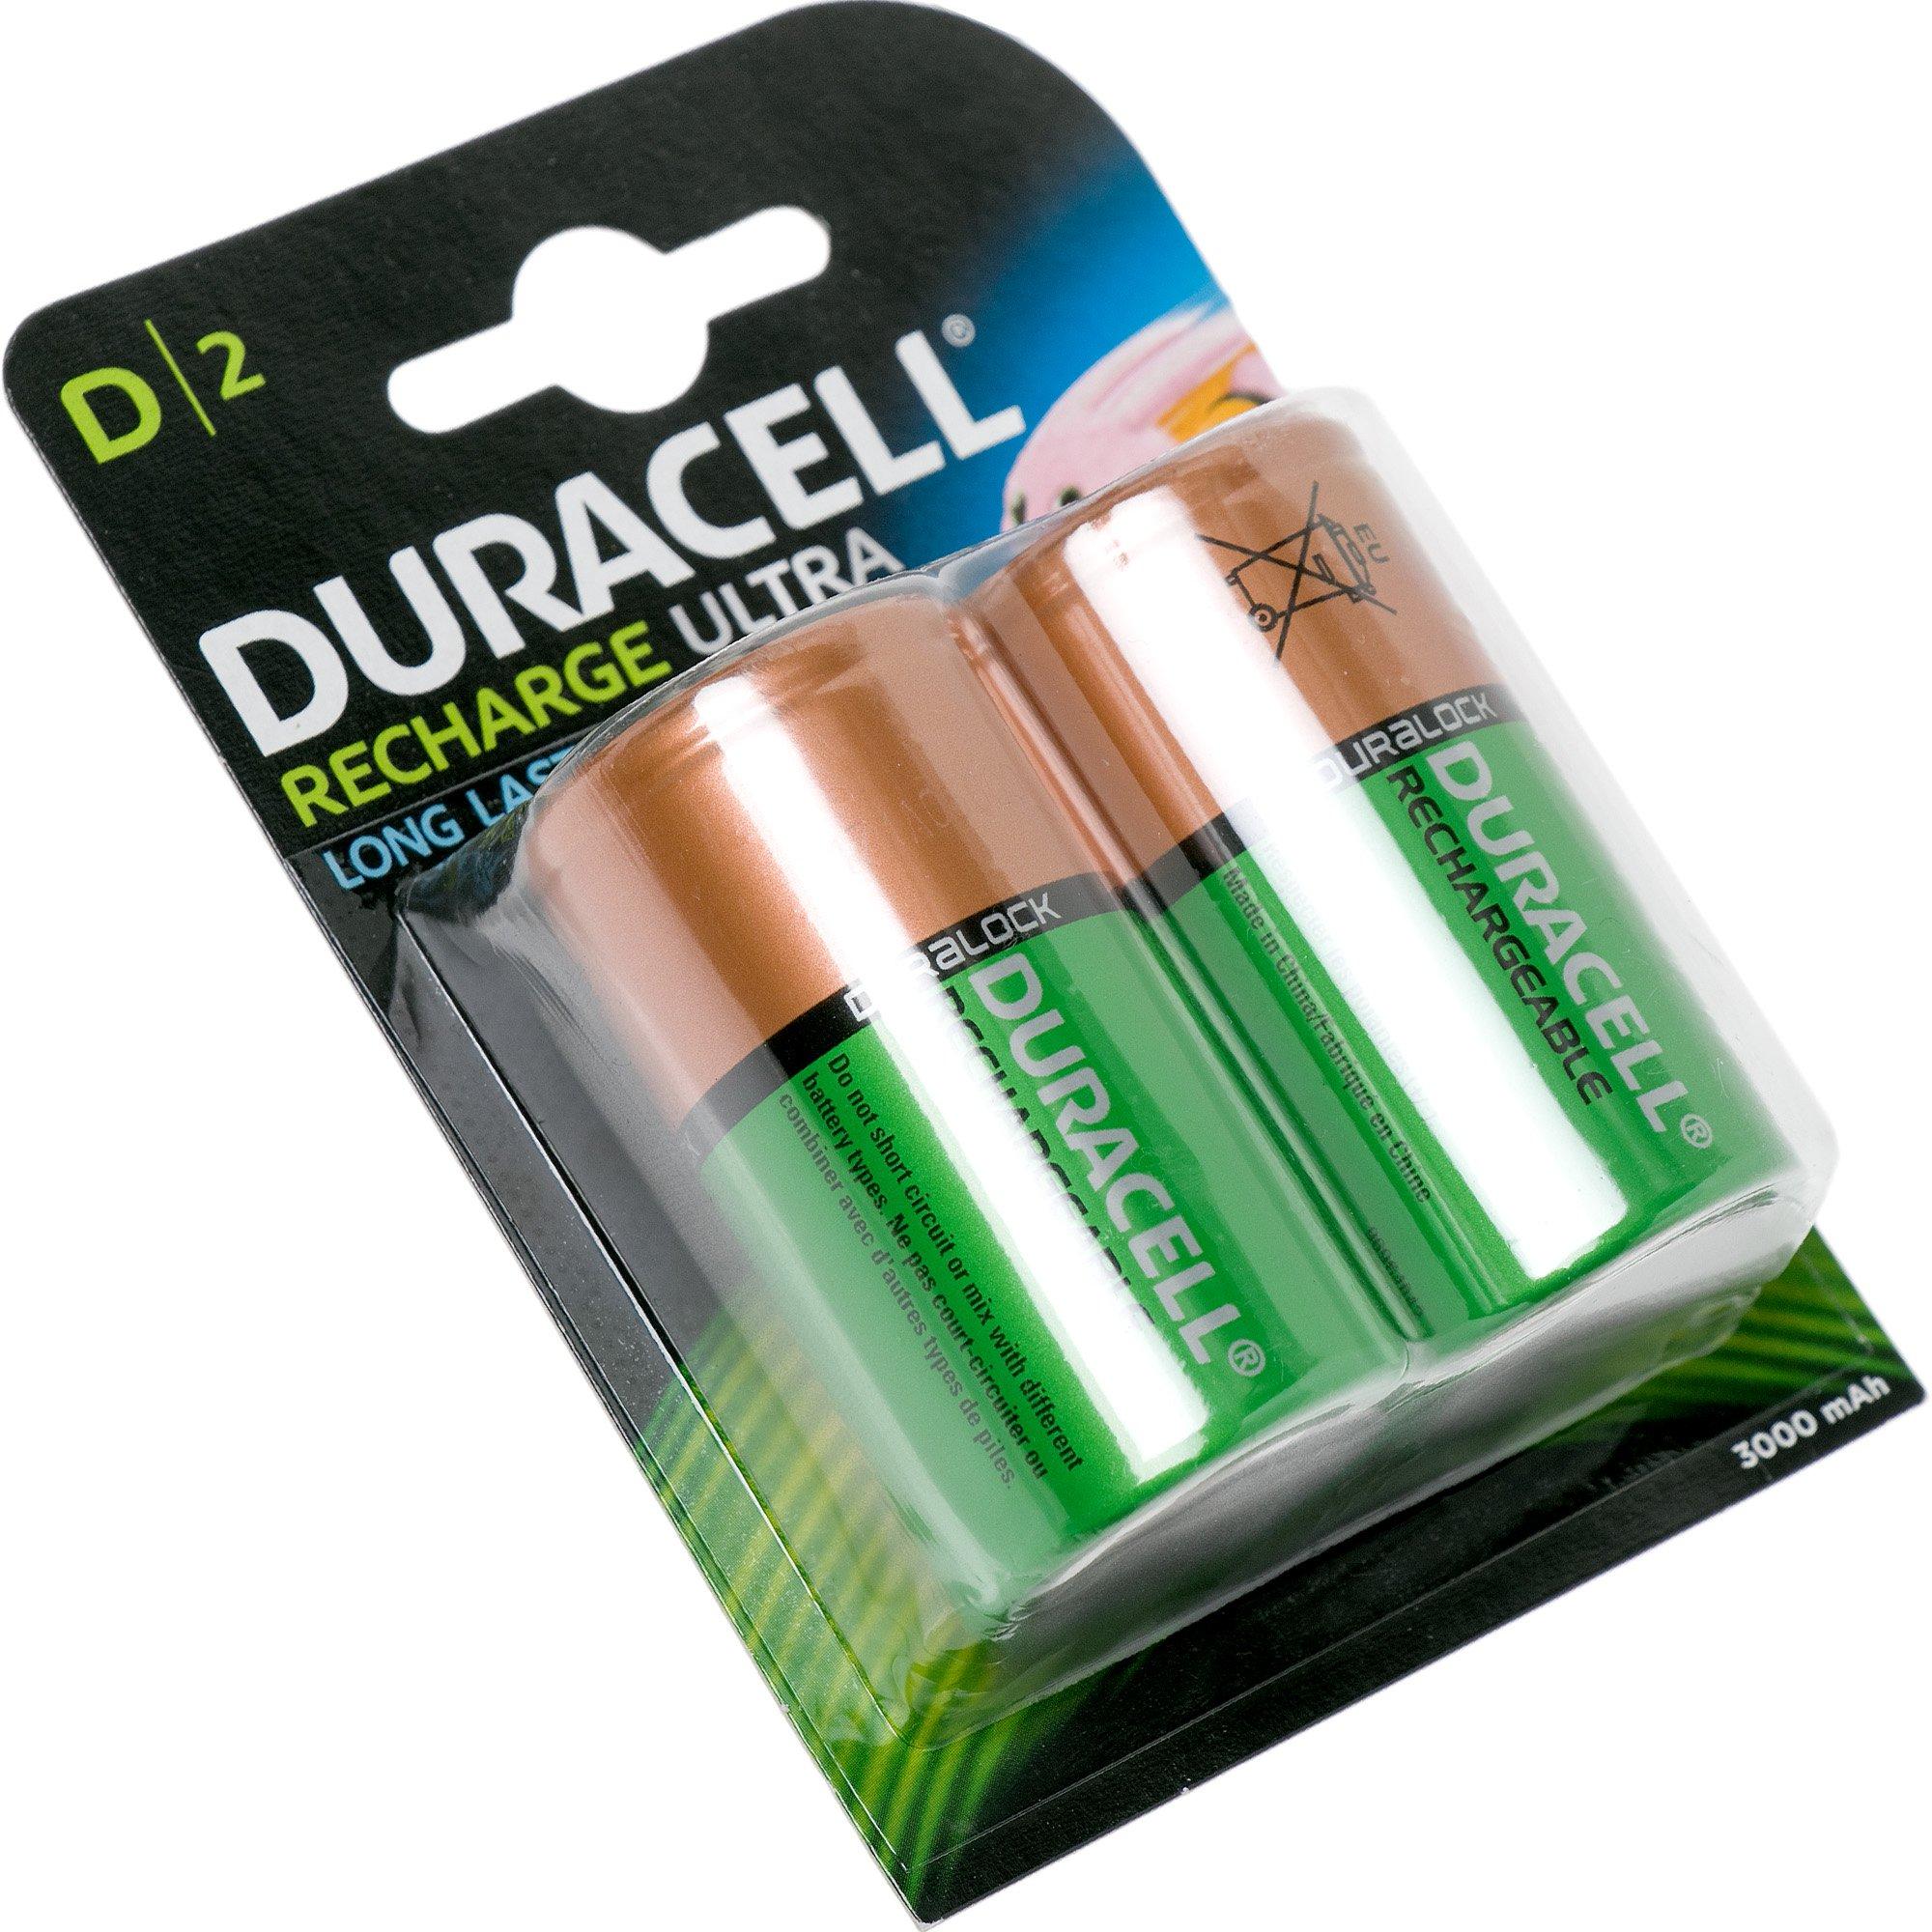 Tenslotte Nucleair Rechthoek Duracell rechargeable D-cell batteries, 2-piece | Advantageously shopping  at Knivesandtools.com